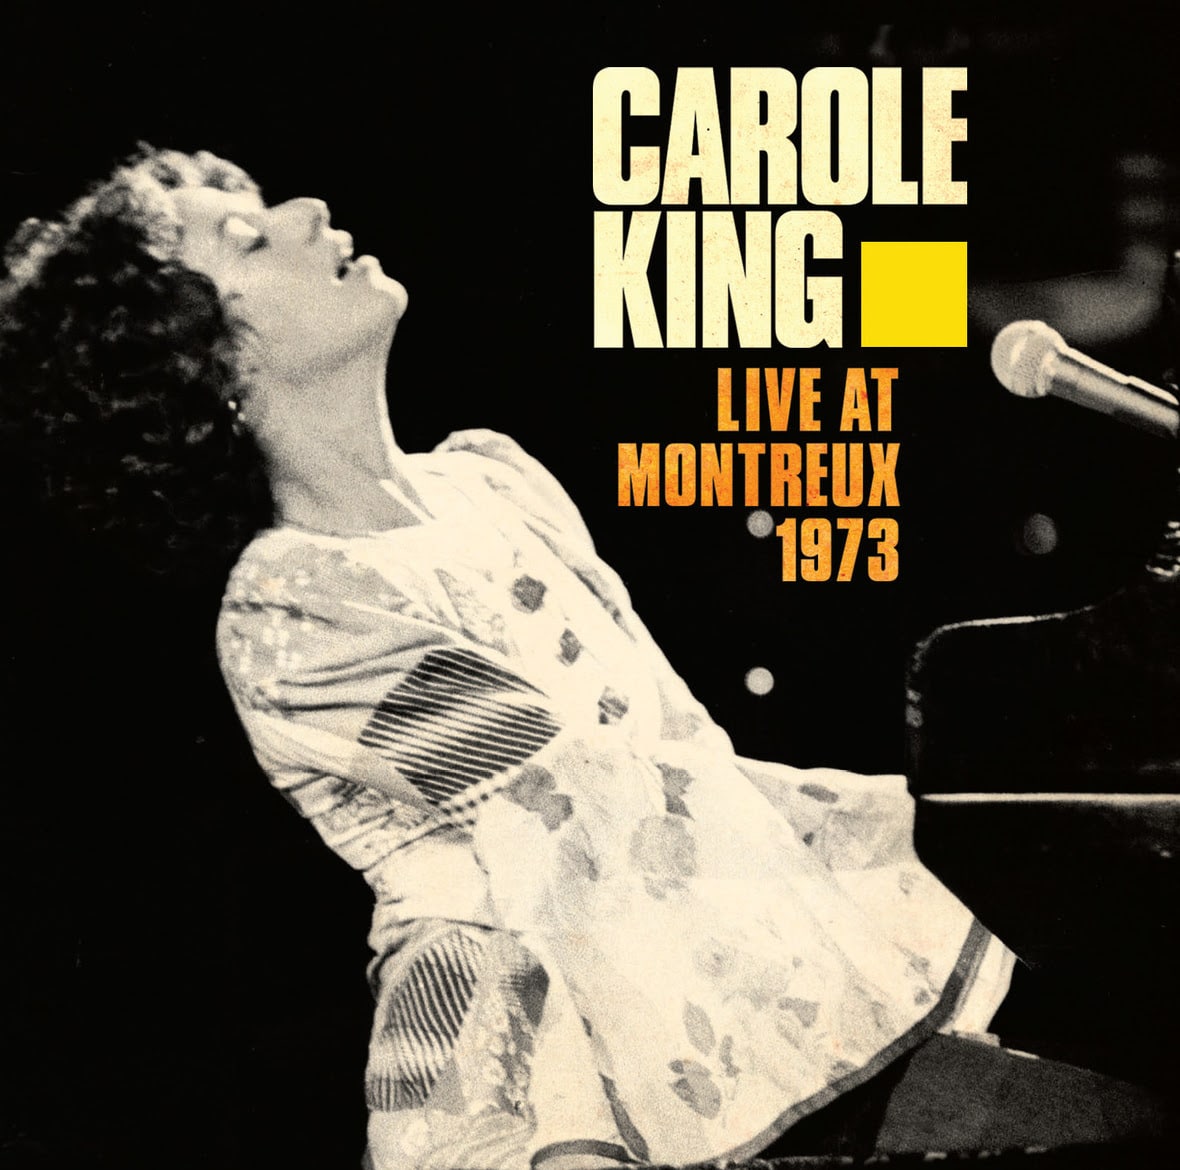 Unreleased Carole King Concert Film Live At Montreux 1973 Due In June